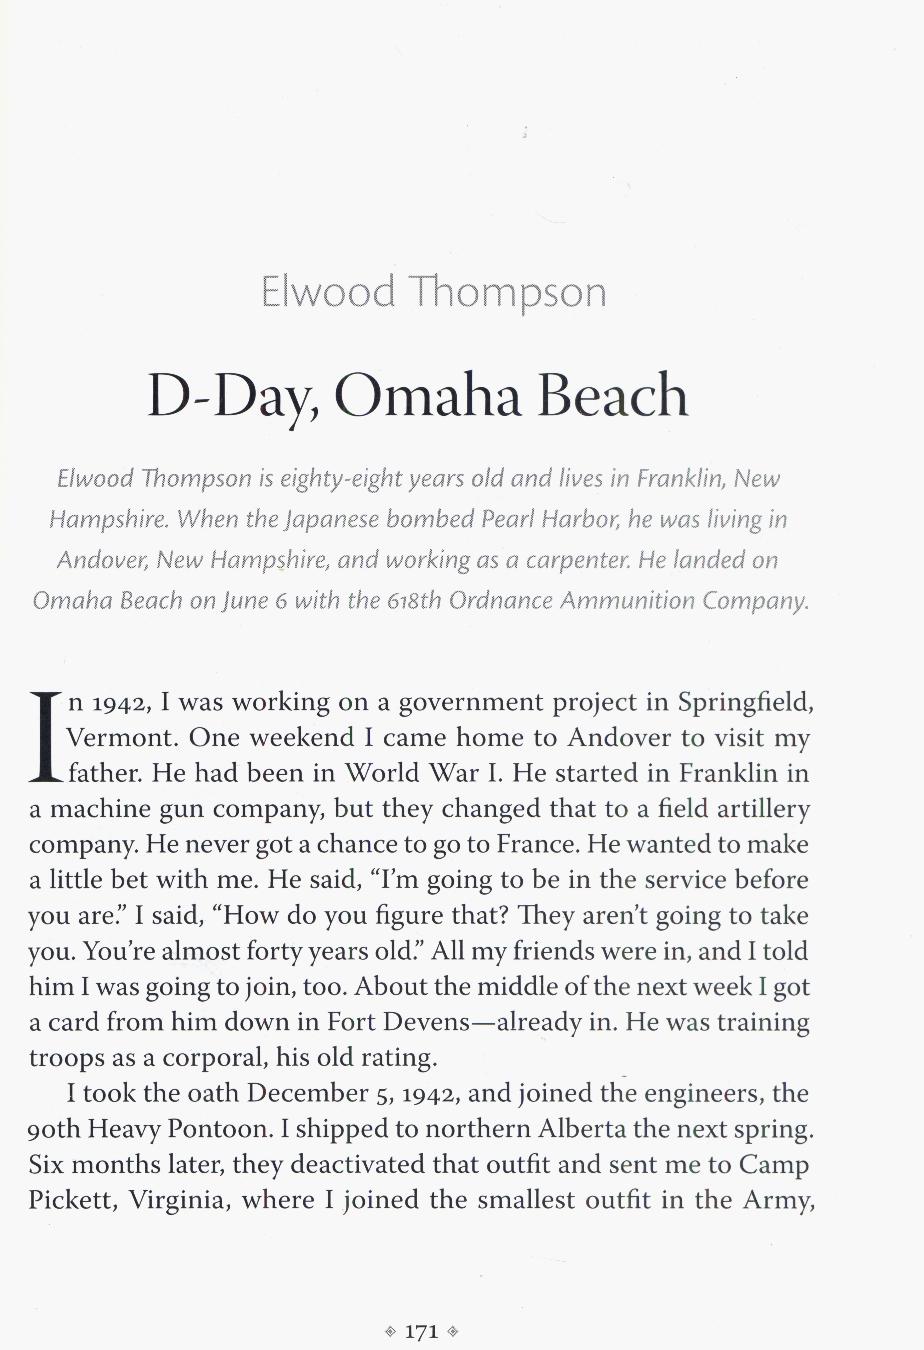 Elwood Thompson D-Day Survivor - Franklin NH